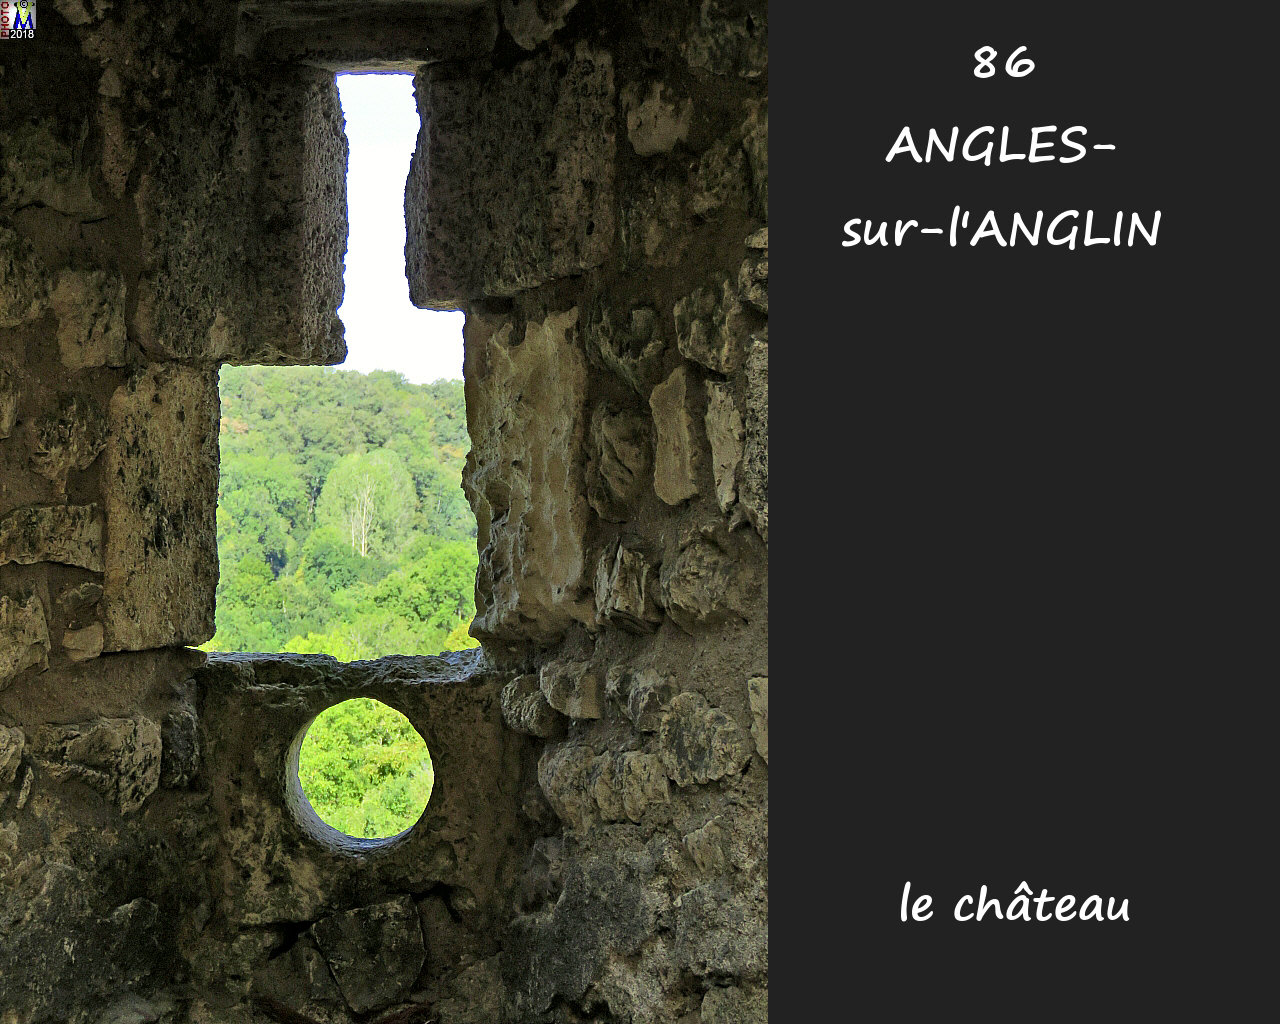 86ANGLES-S-ANGLIN_chateau_1114.jpg